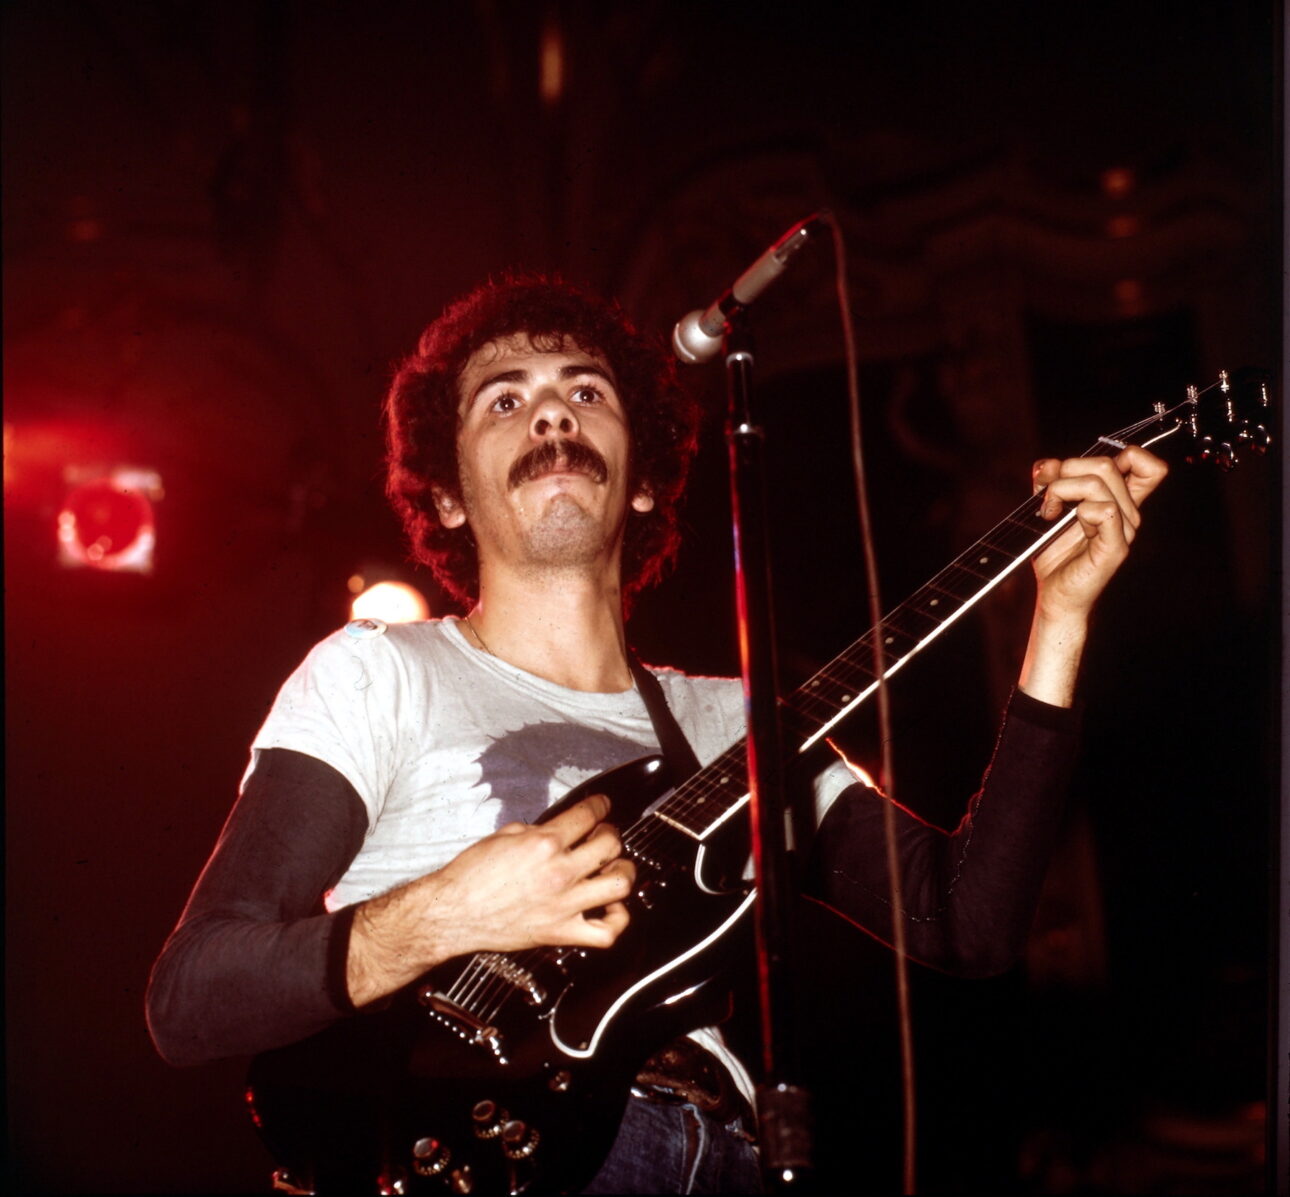 Carlos Santana in 1974. (Credit: Hans G. Lehmann/ullstein bild via Getty Images)